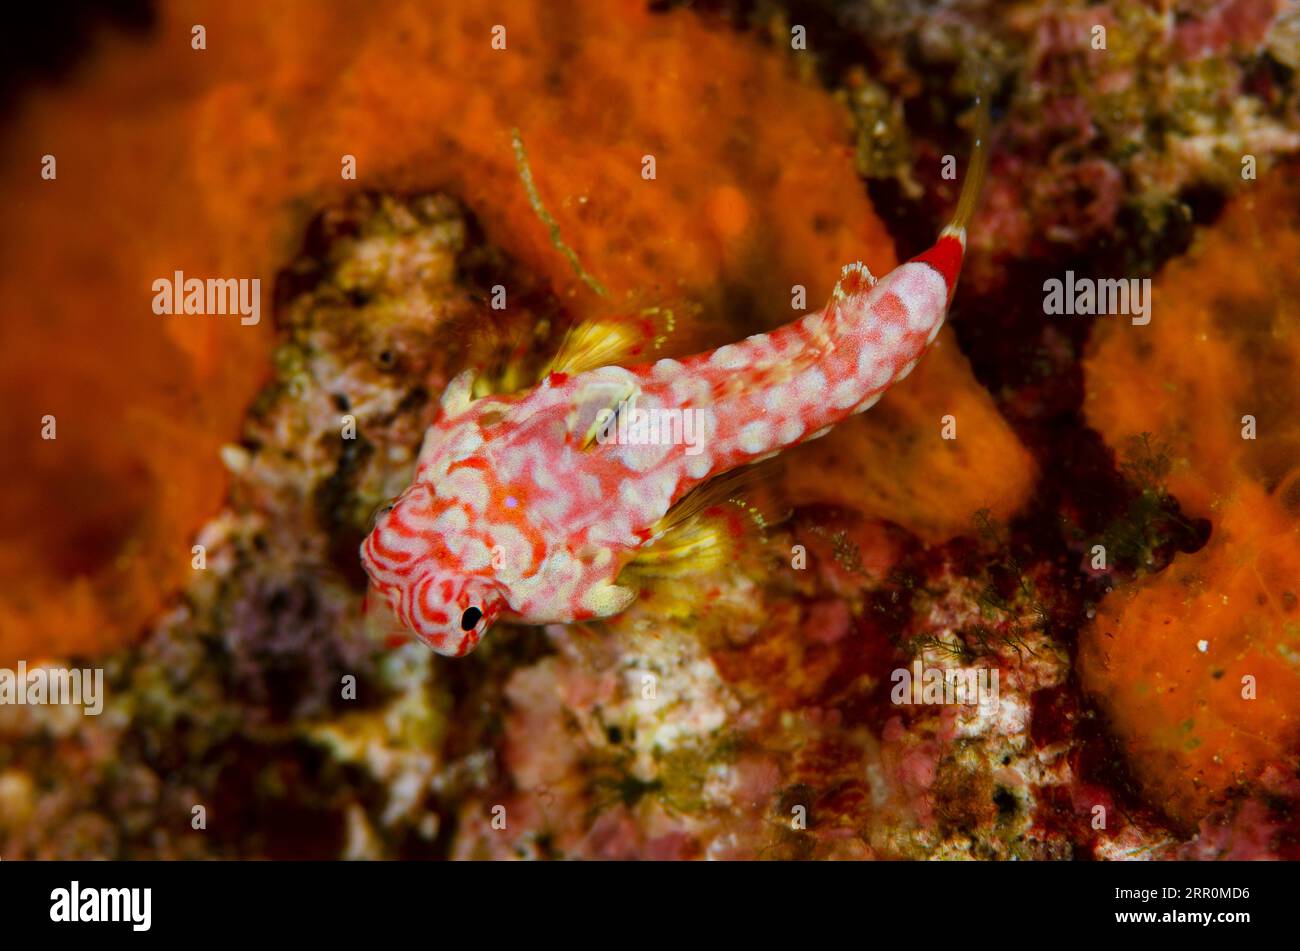 Starry Dragonet, Synchiropus stellatus, Gorango Mini dive site, Weda, Halmahera, North Maluku, Indonesia, Halmahera Sea Stock Photo